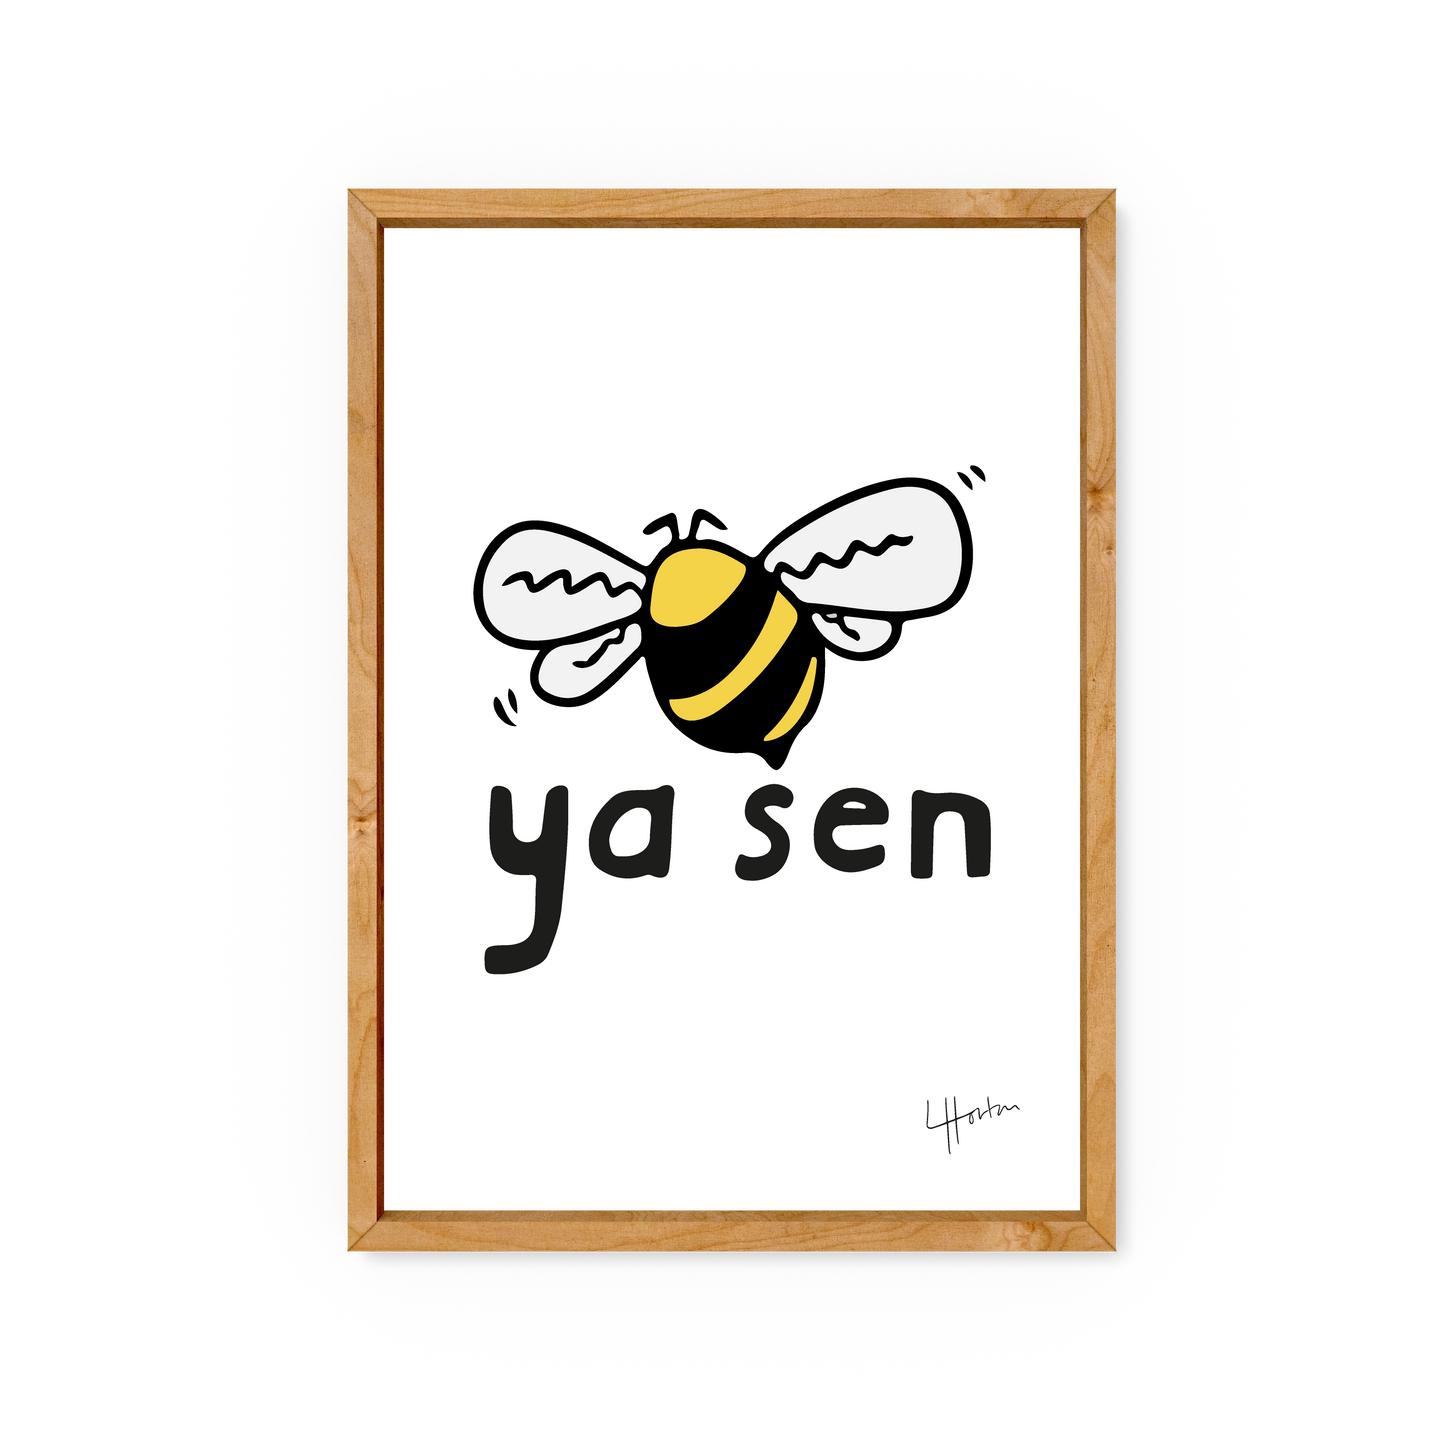 Be Ya Sen - Wellbeing Yorkshire Art Print - Luke Horton